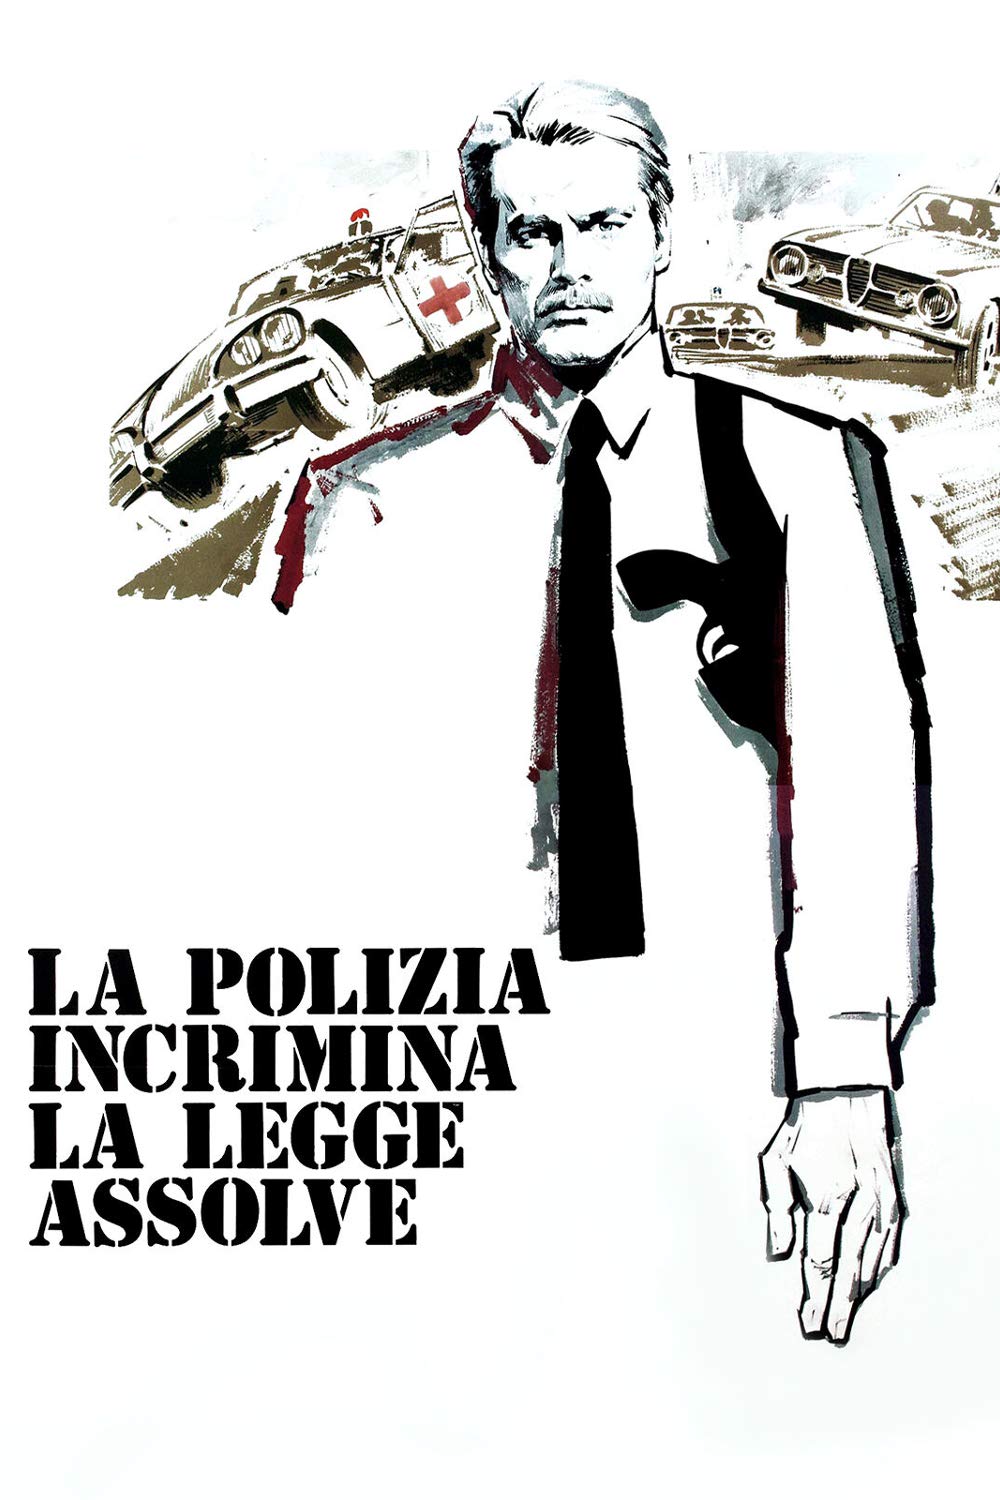 La polizia incrimina, la legge assolve [HD] (1973)